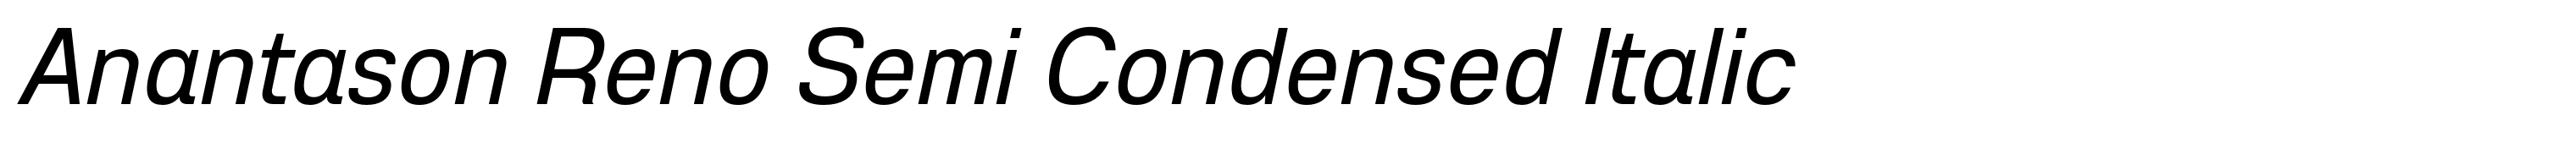 Anantason Reno Semi Condensed Italic